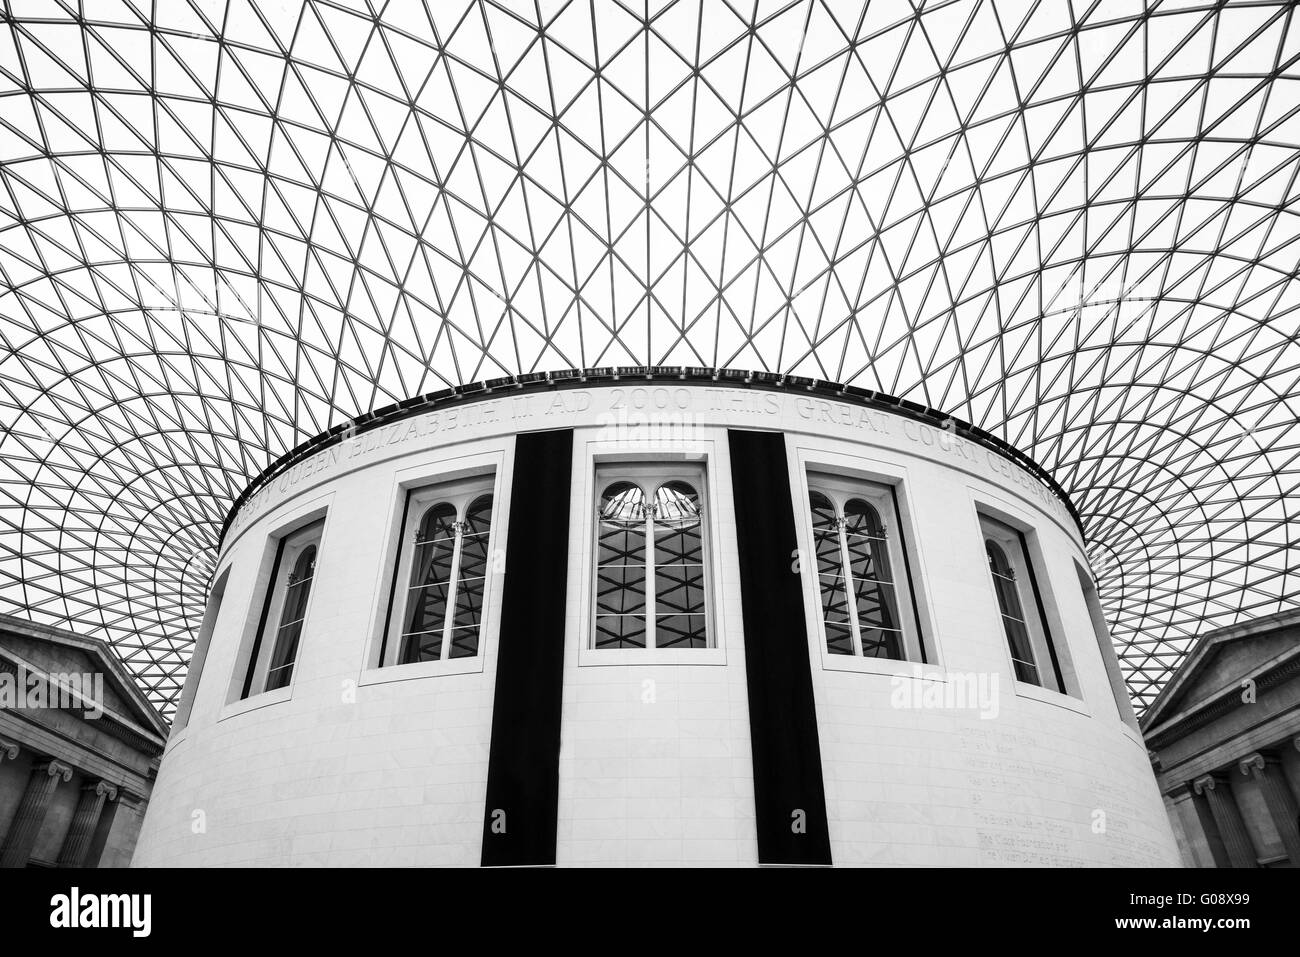 Atrium, British Museum London Stock Photo - Alamy